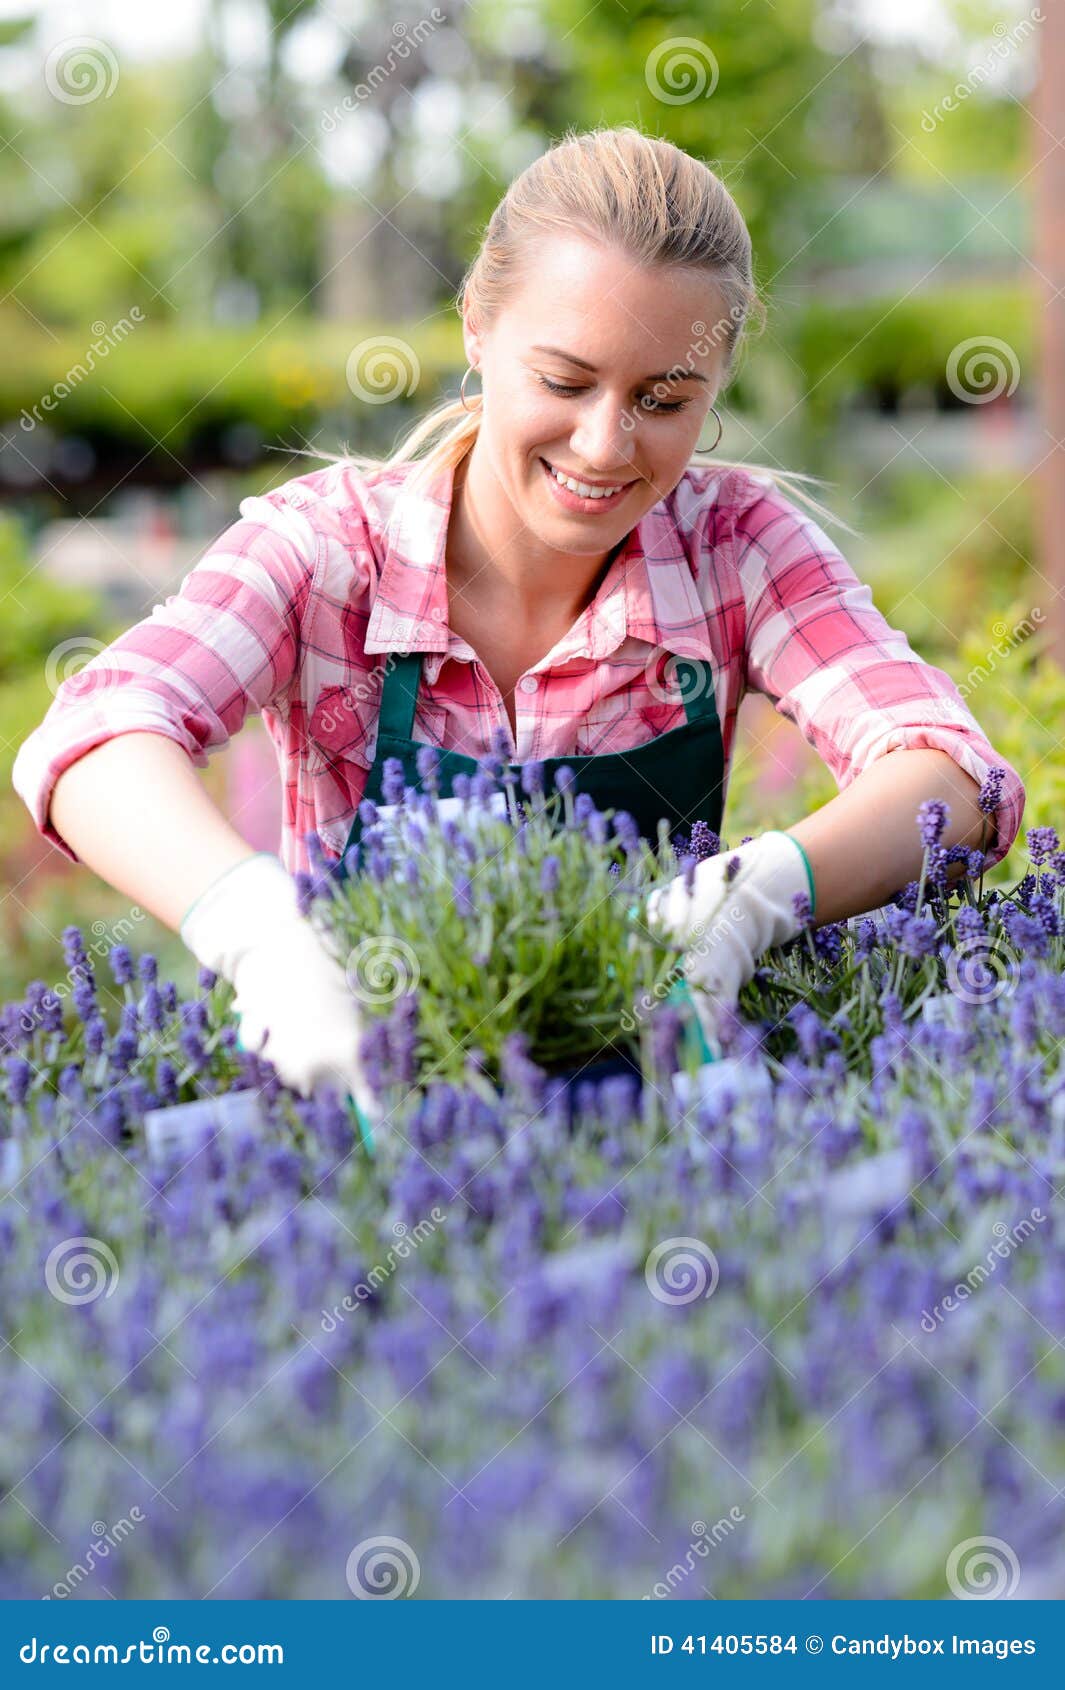 garden center woman in lavender flowerbed smiling